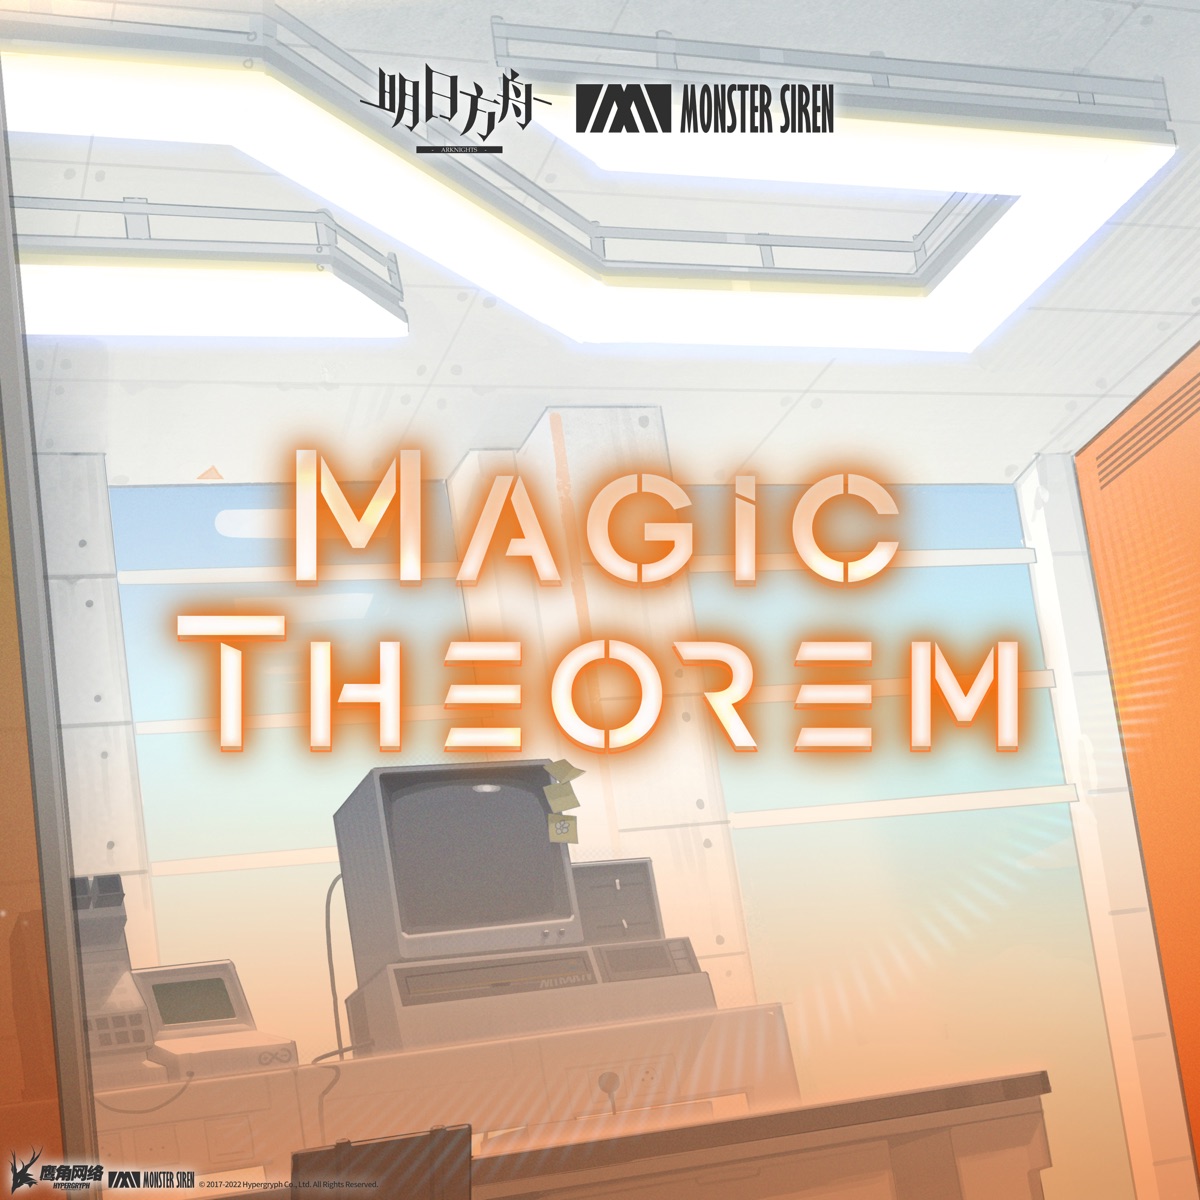 『Sarah Kang - Magic Theorem』収録の『Magic Theorem』ジャケット